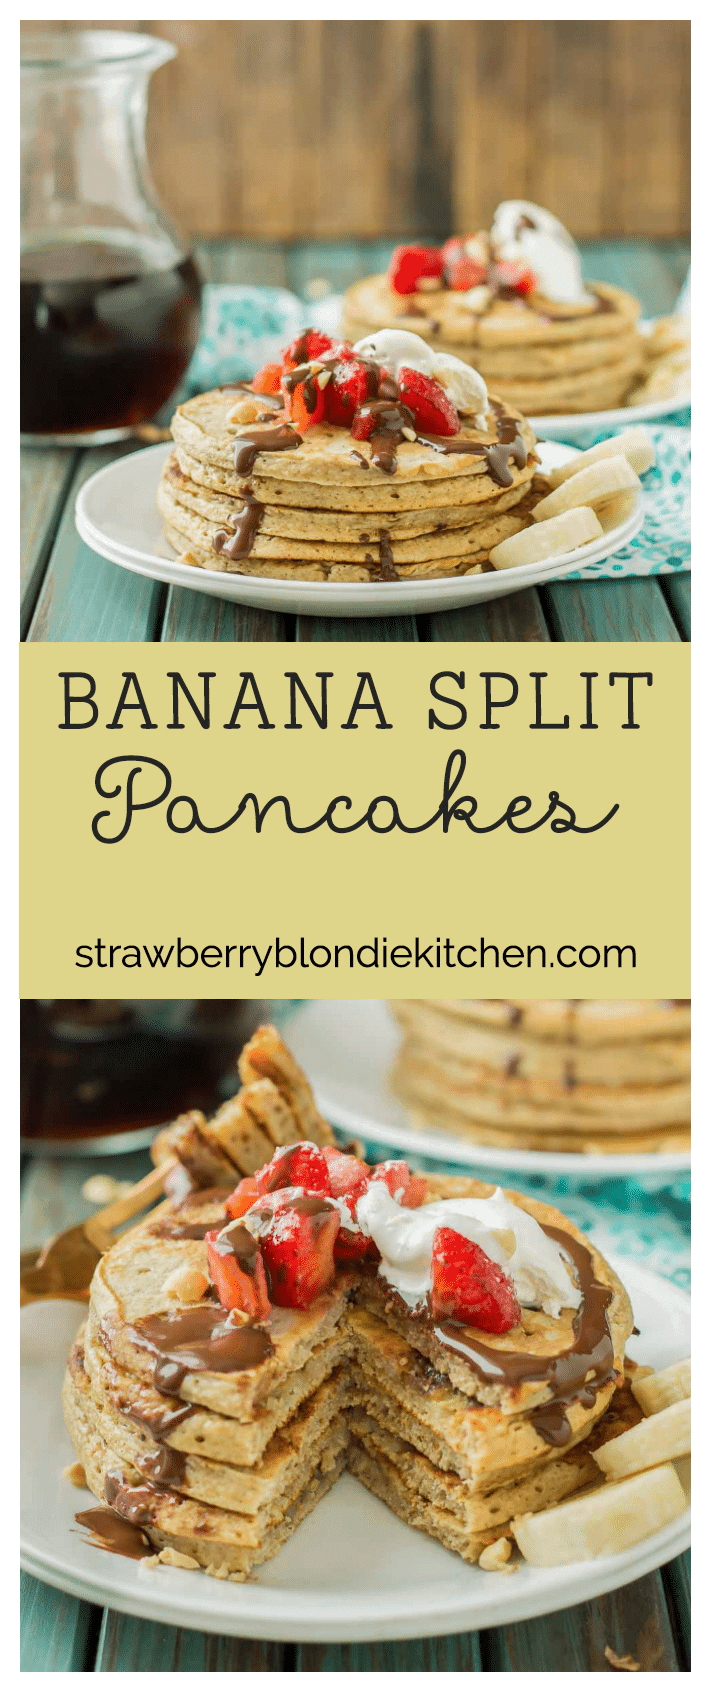 Banana Split Pancakes - Strawberry Blondie Kitchen